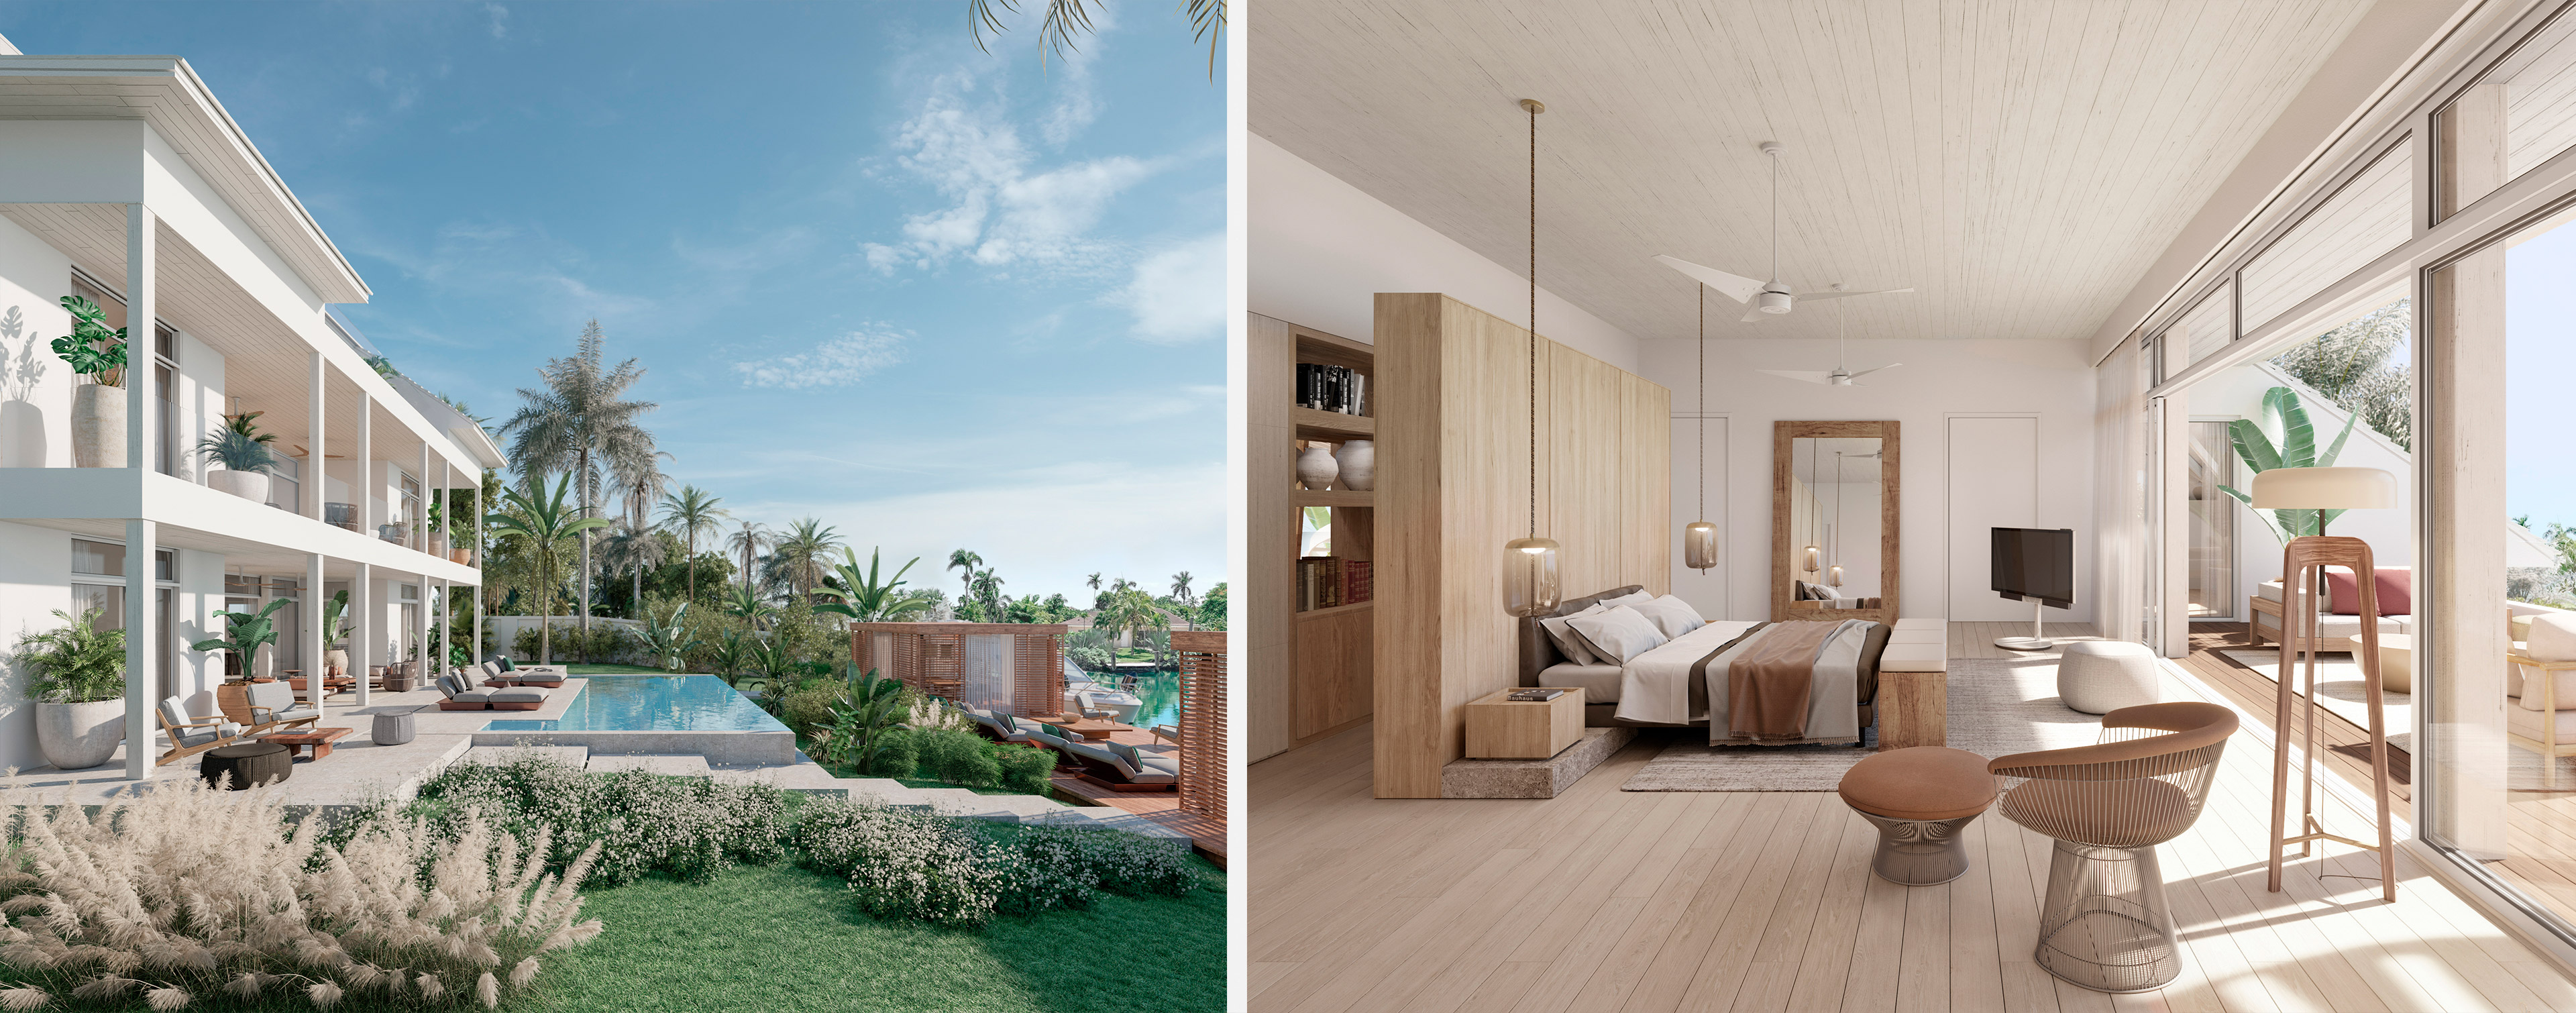 luv studio luxury architects bahamas lyford cay villa IMG 03 - Lyford Cay Villa